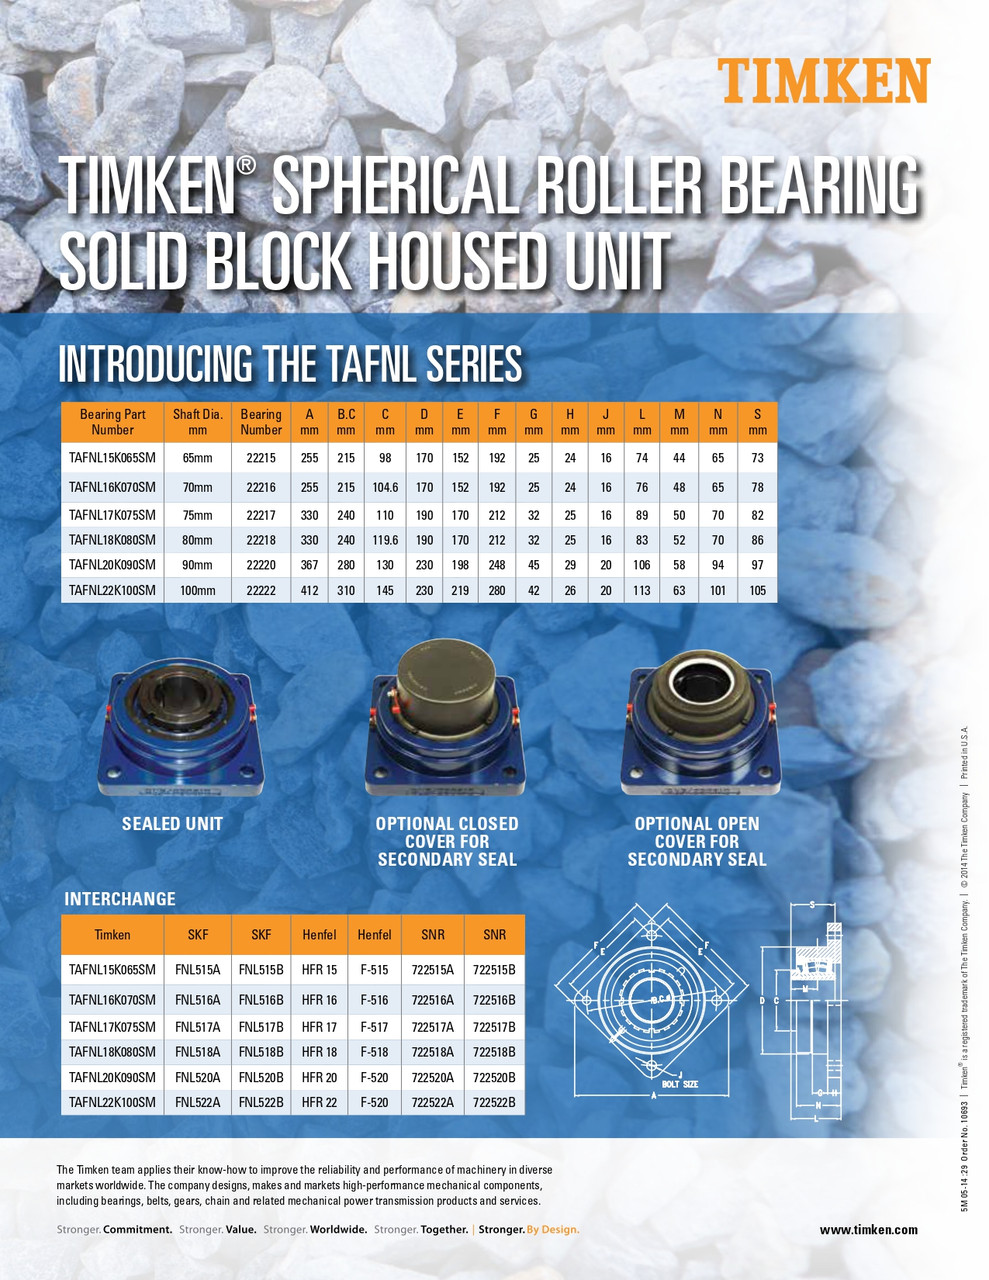 3-3/16" Timken TAFNL Square Flange Block - Taper Lock Adapter - Teflon Labyrinth Seals - Fixed  TAFNL18K303SET